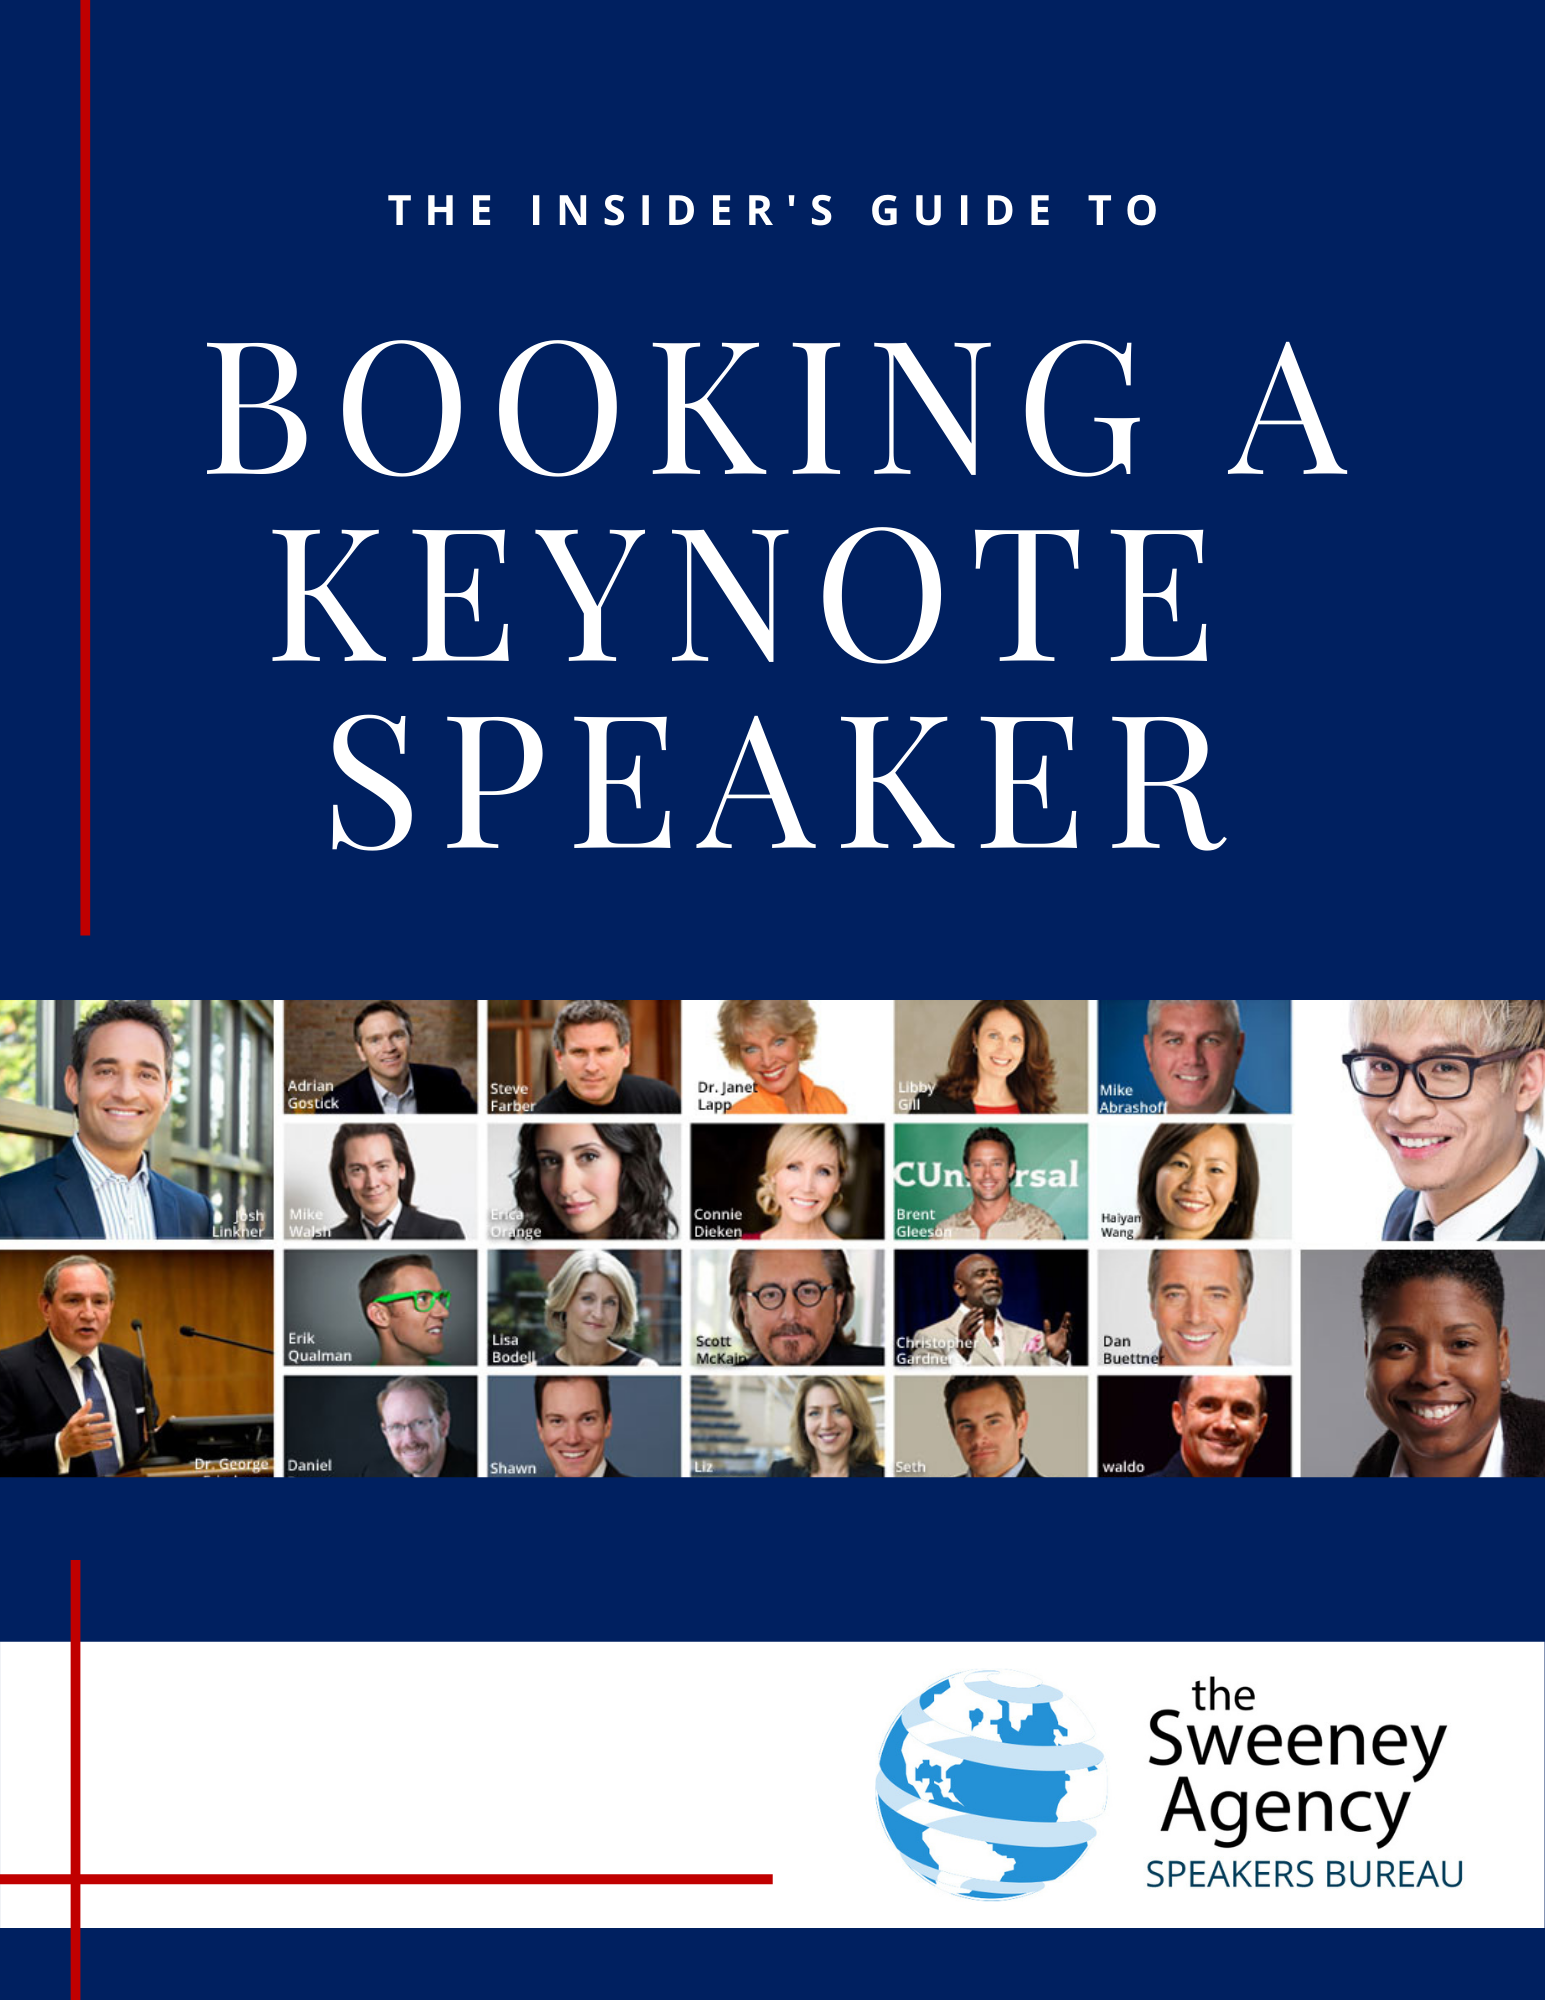 The Insider's Guide to Booking a Keynote Speaker by The Sweeney Agency Speakers Bureau